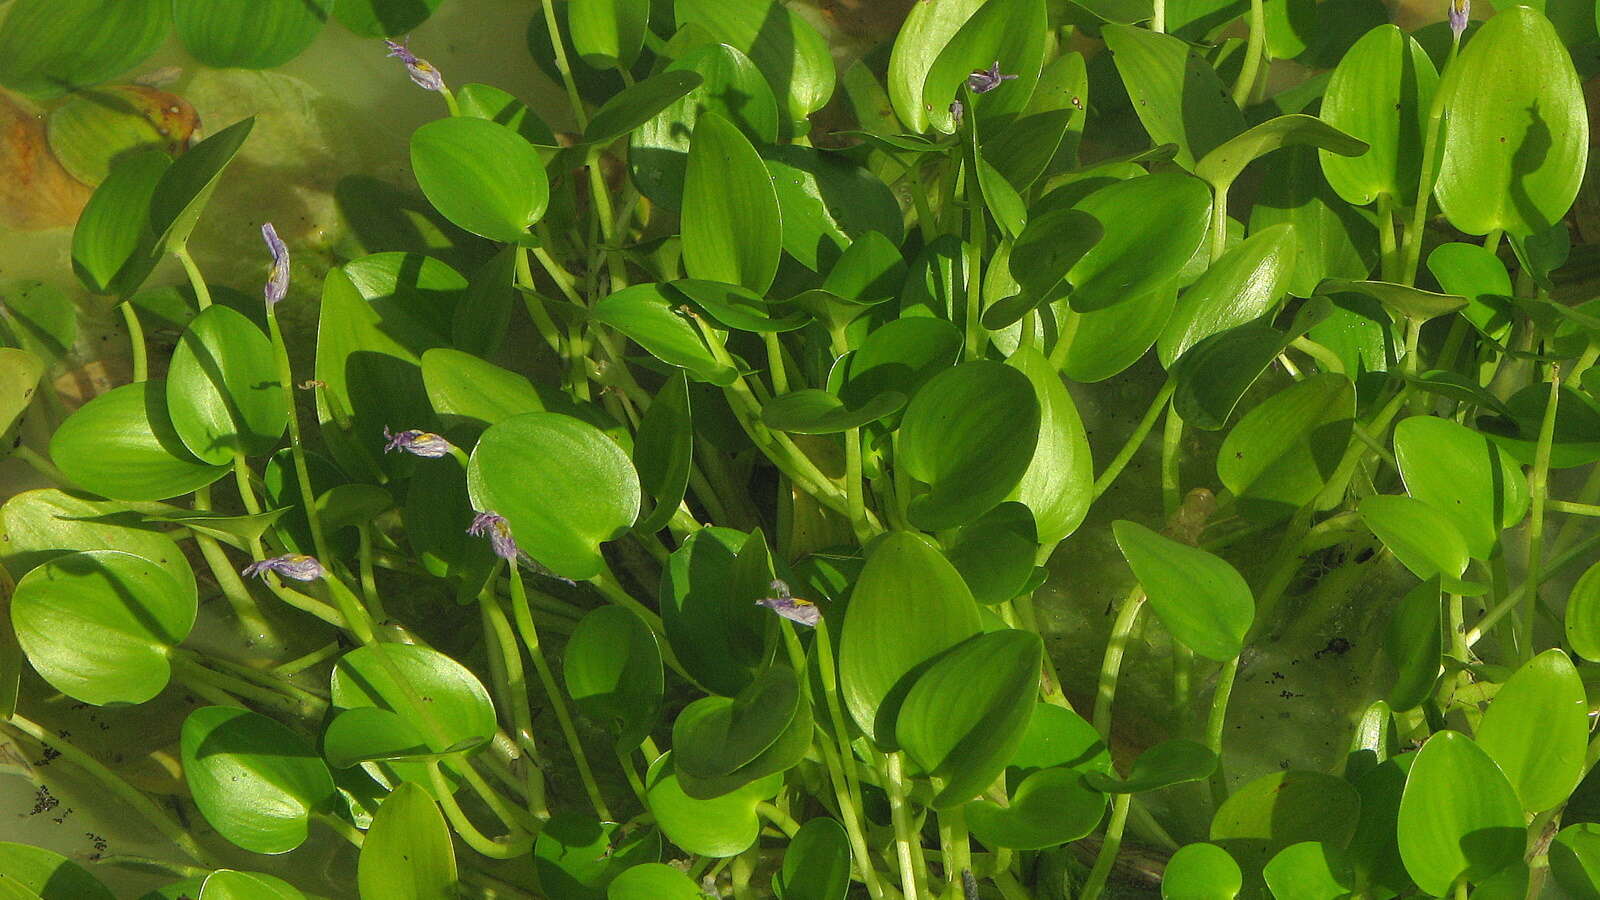 Image of mudplantain